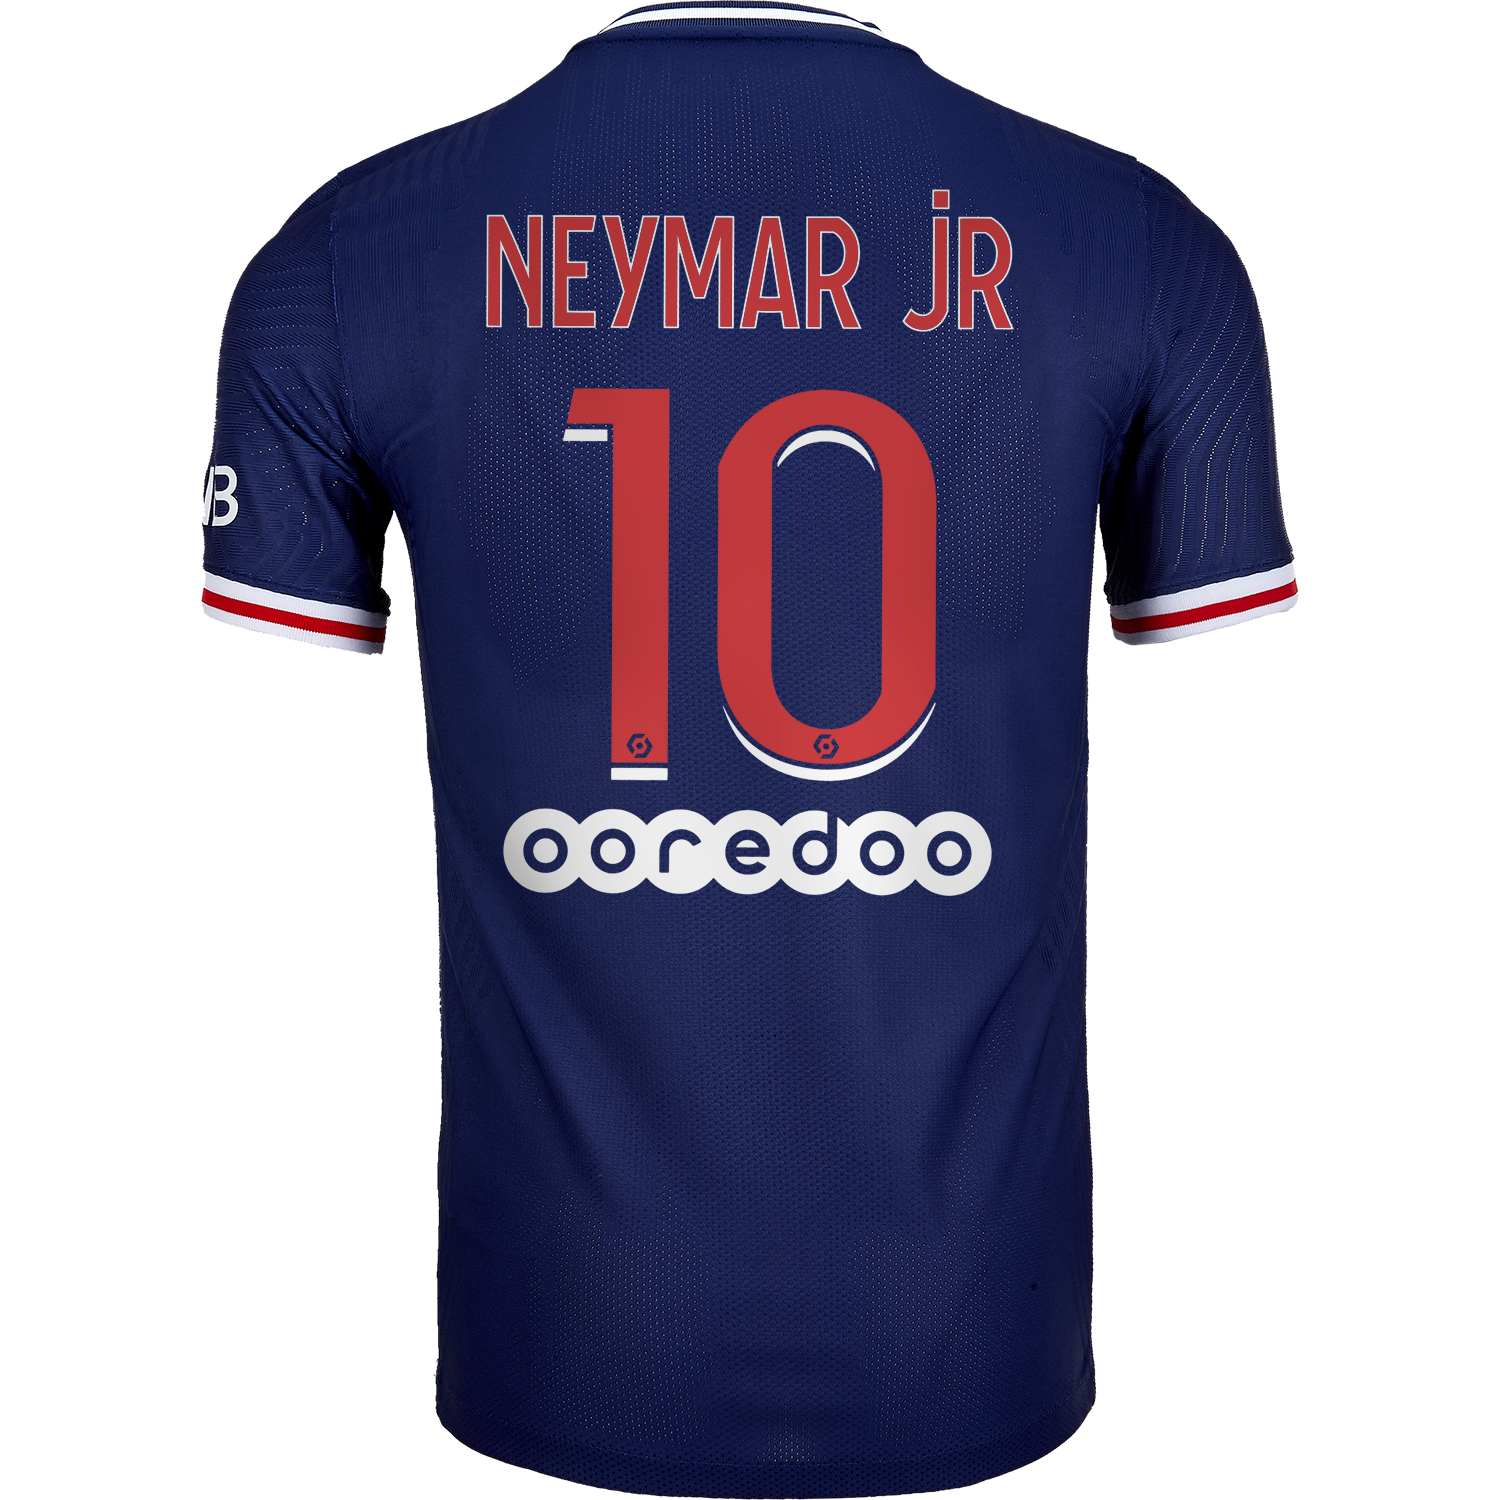 2020/21 Neymar Jr PSG Home Match Jersey - Soccer Master